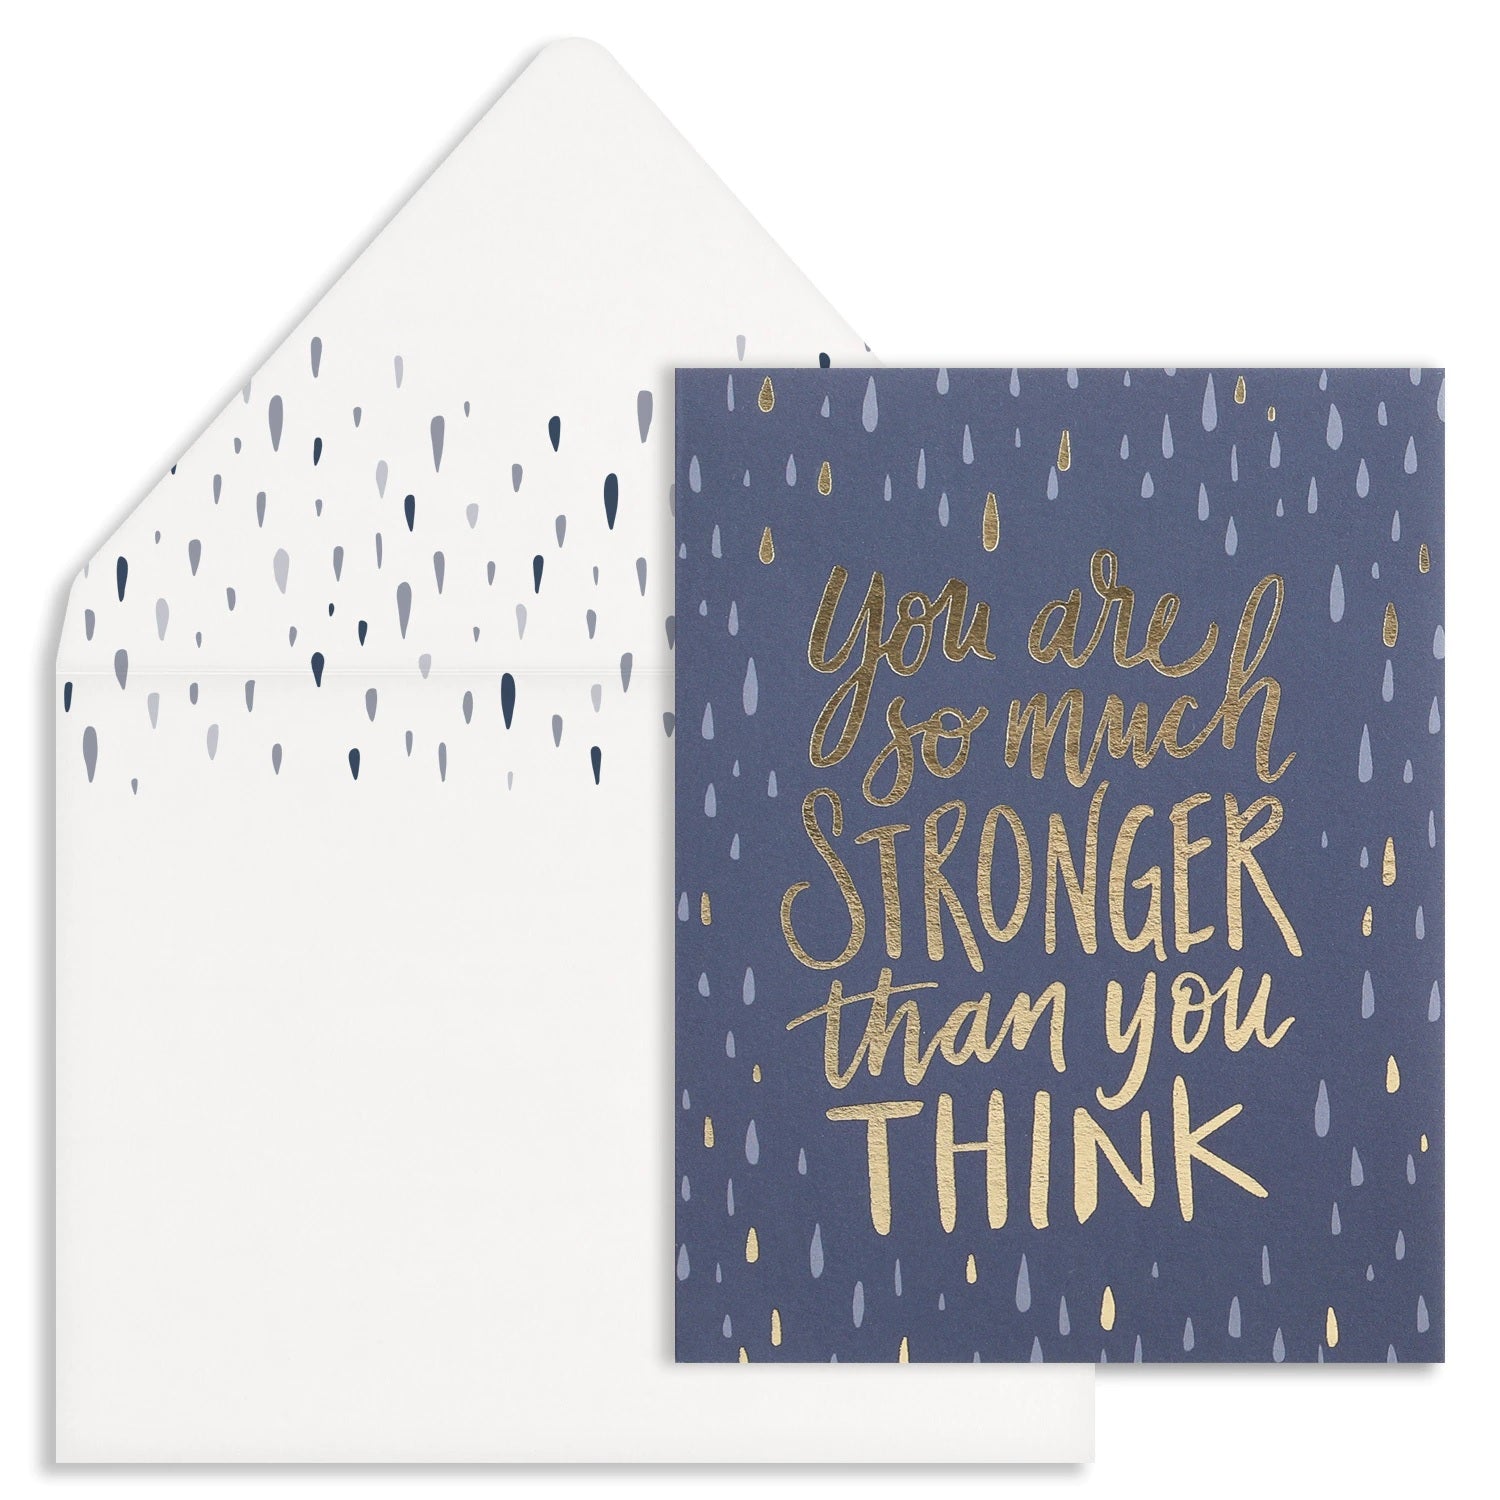 Encouragement Greeting Card - Stronger